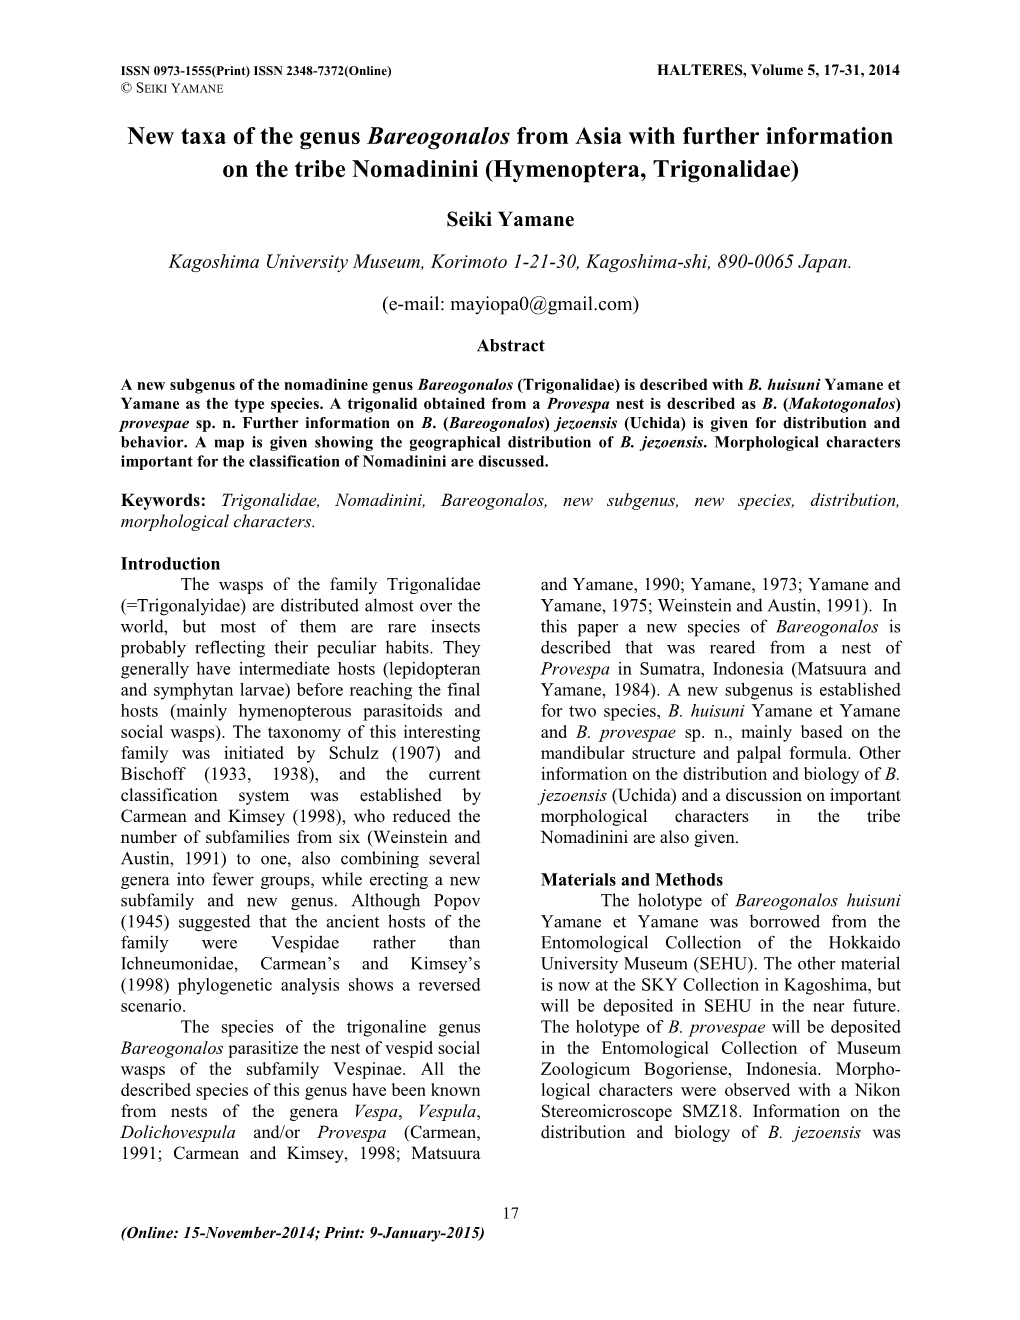 New Taxa of the Genus Bareogonalos from Asia with Further Information on the Tribe Nomadinini (Hymenoptera, Trigonalidae)